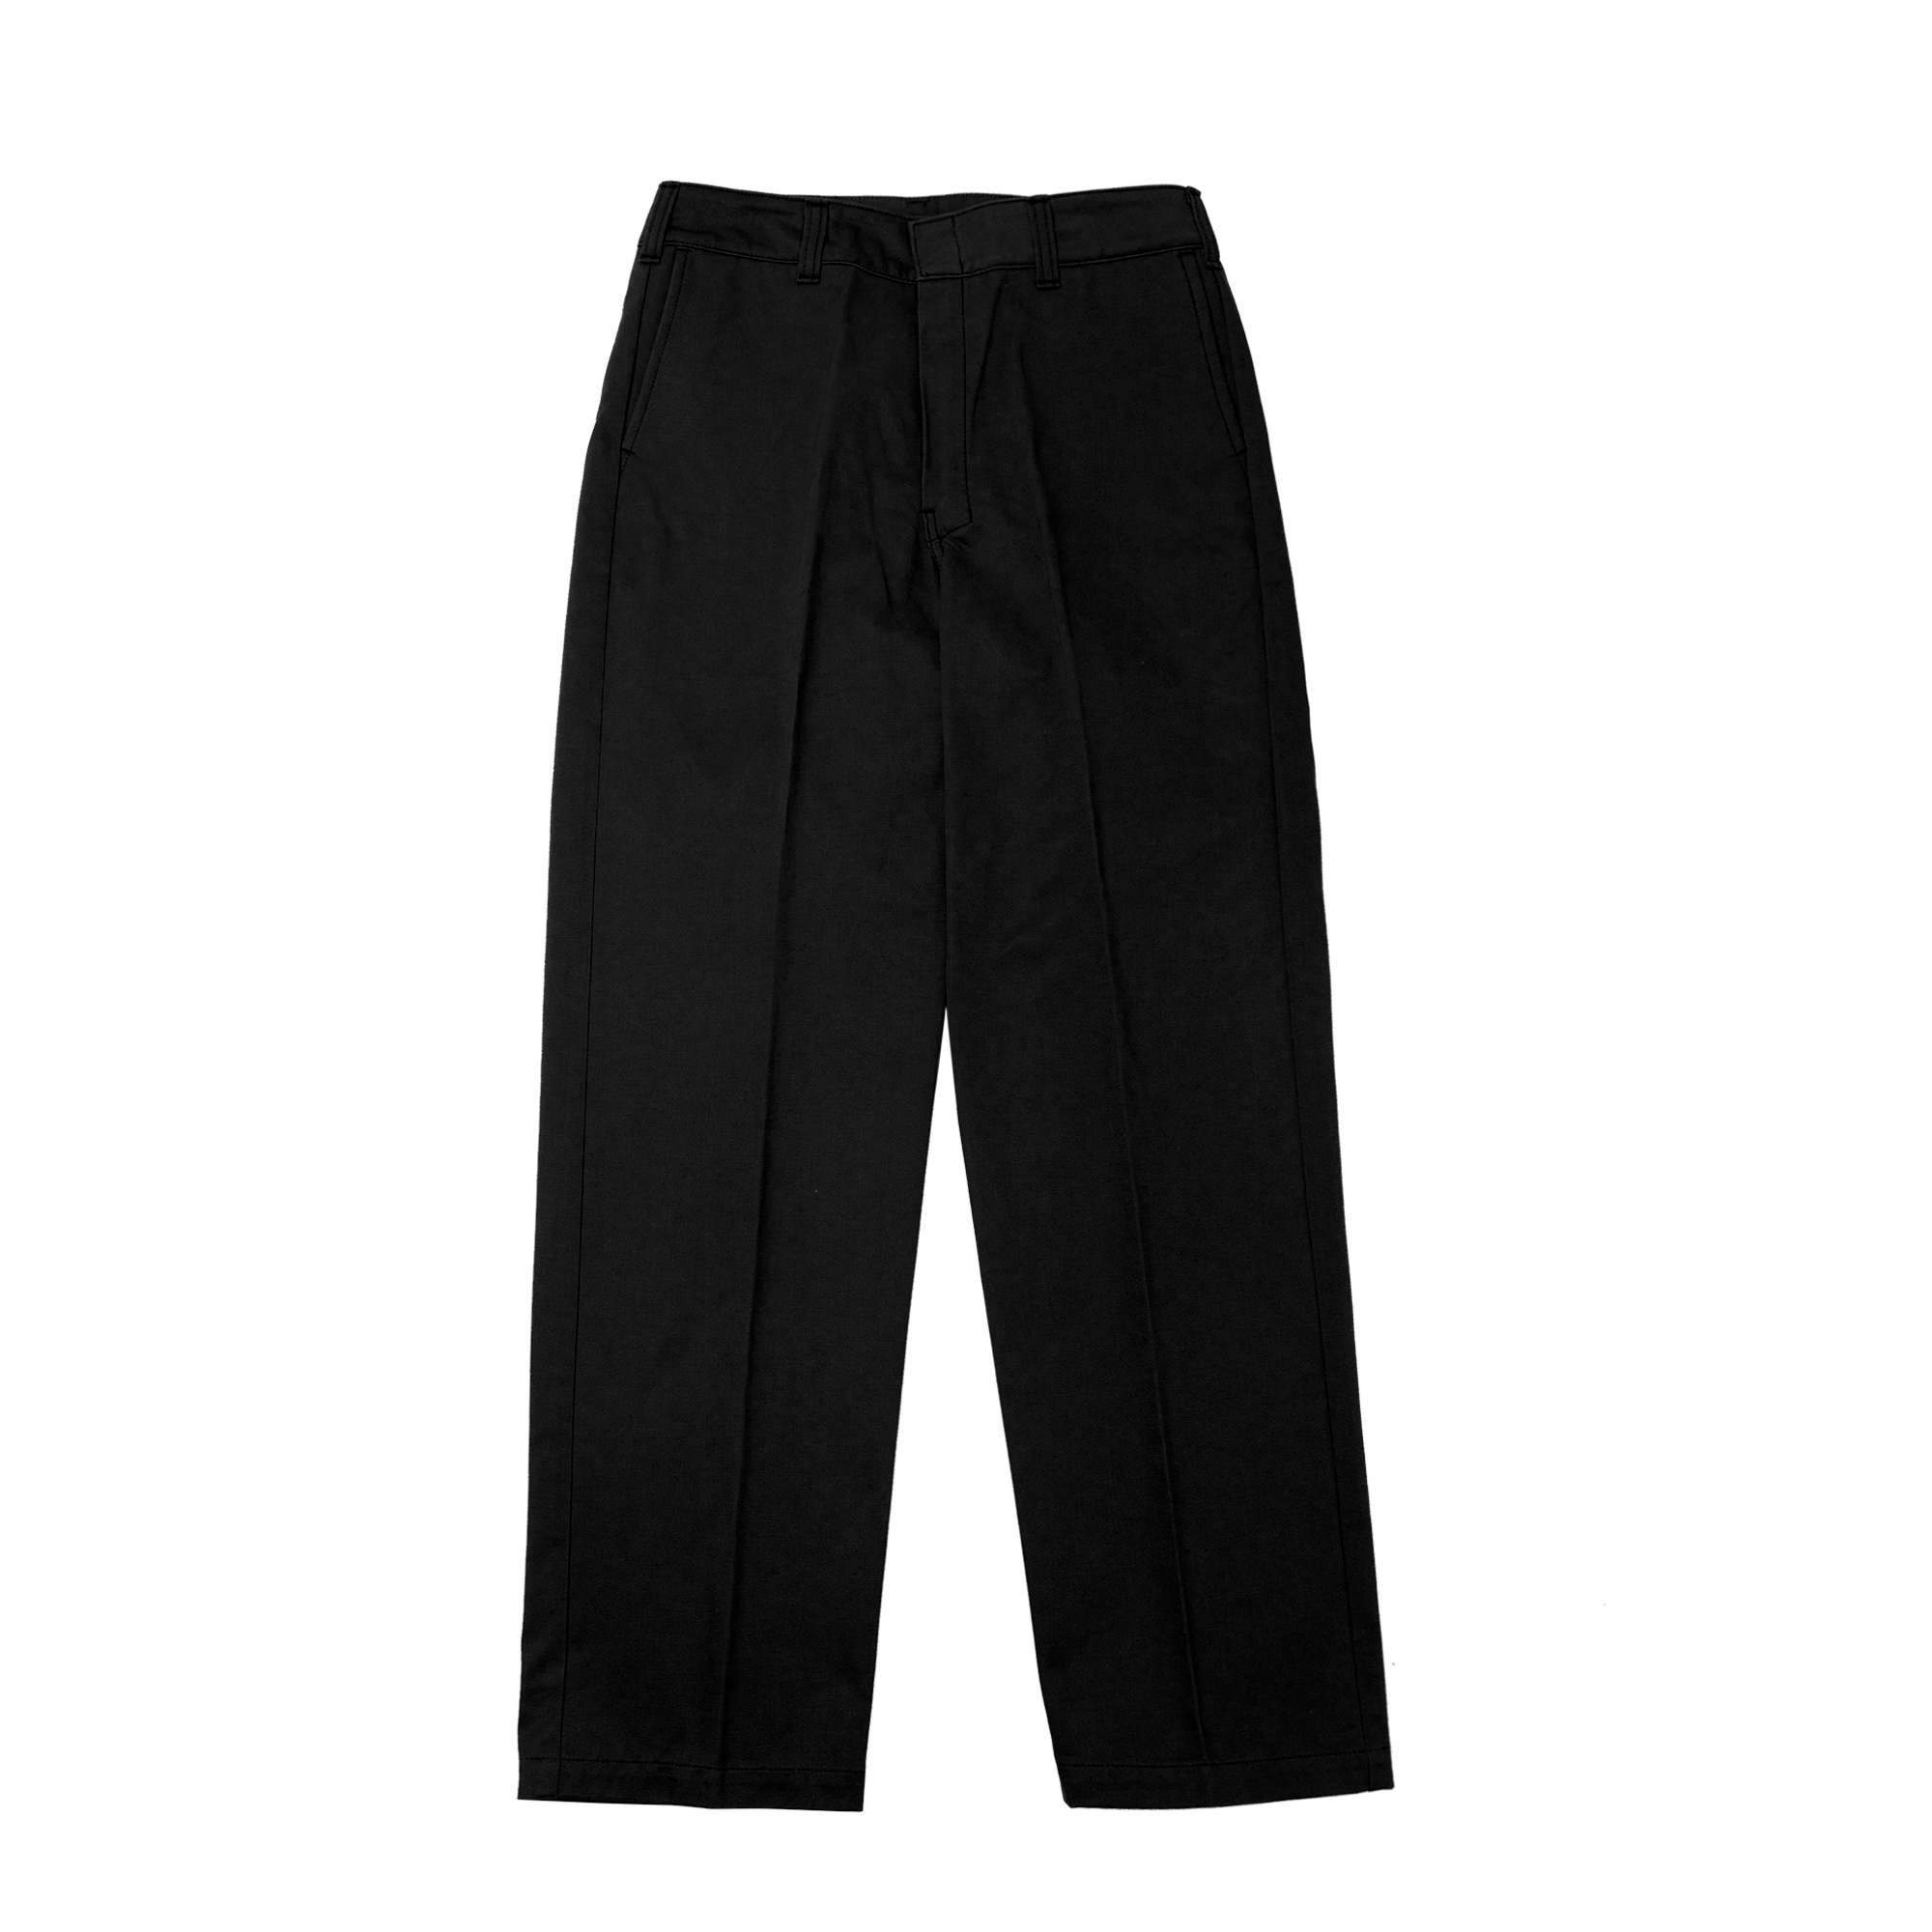 8HU Heavy Cotton Drill Full-Cut Work Trousers (Black)